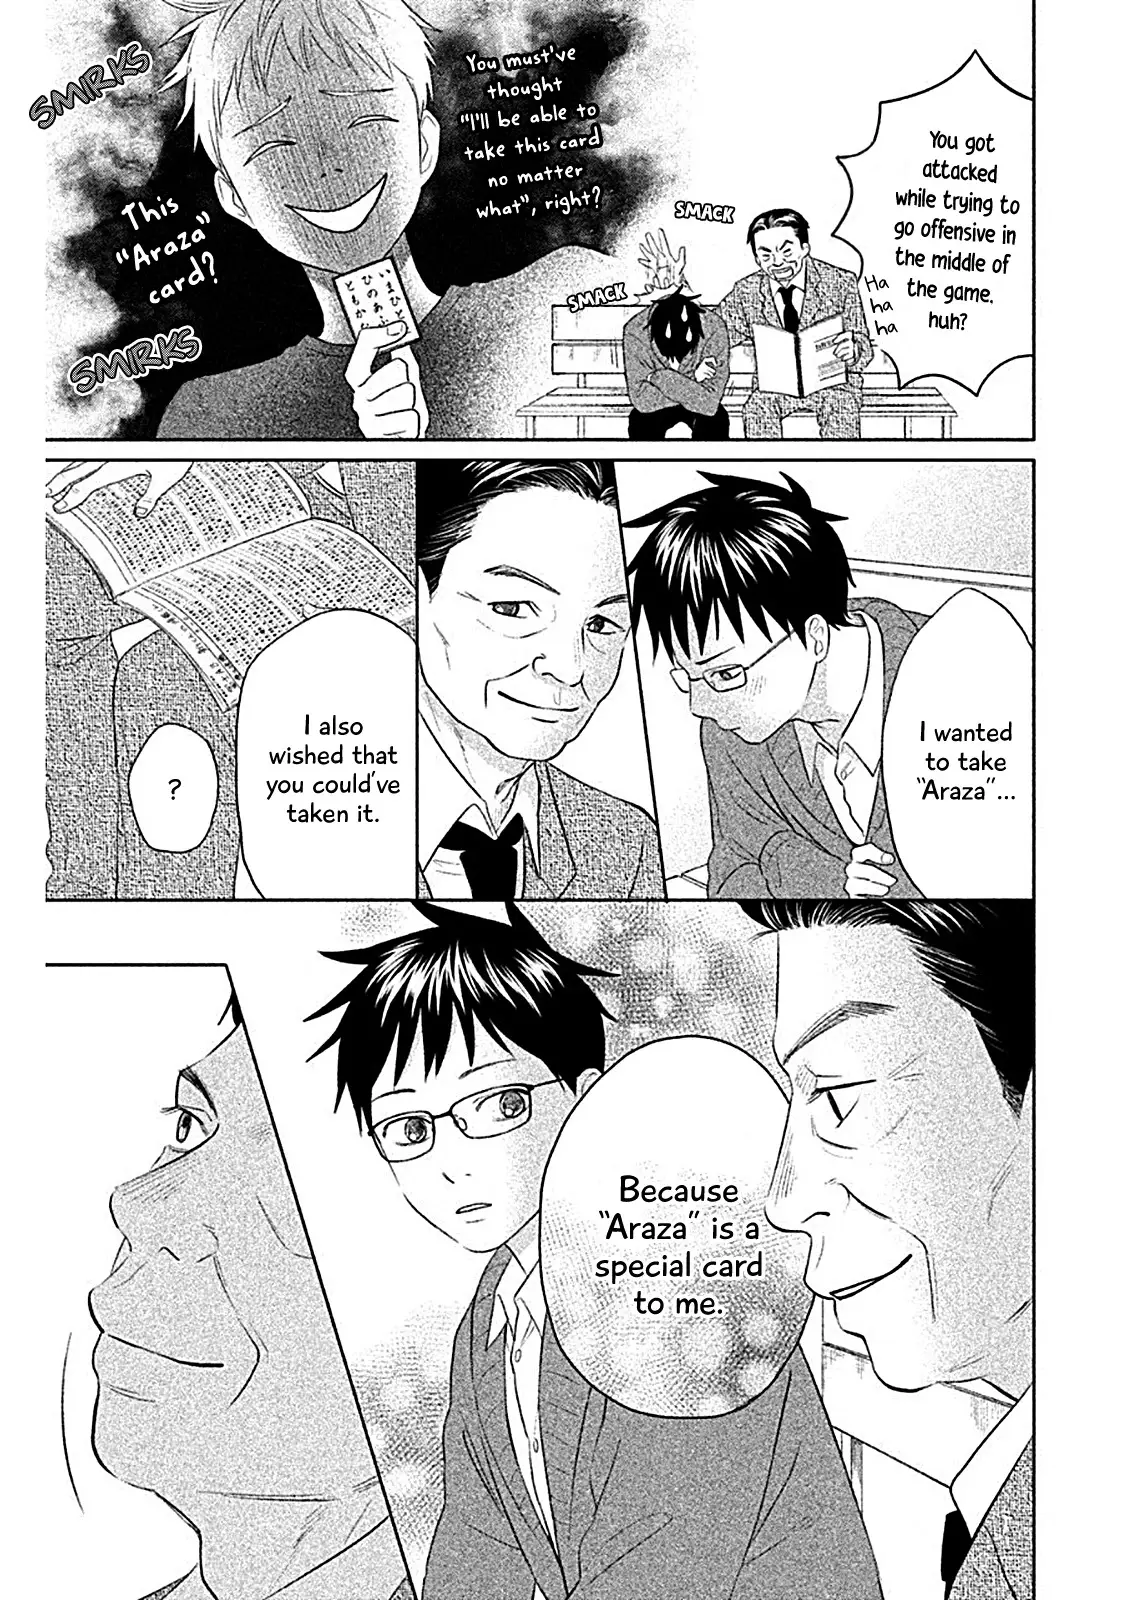 Chihayafuru: Middle School Arc - 7 page 9